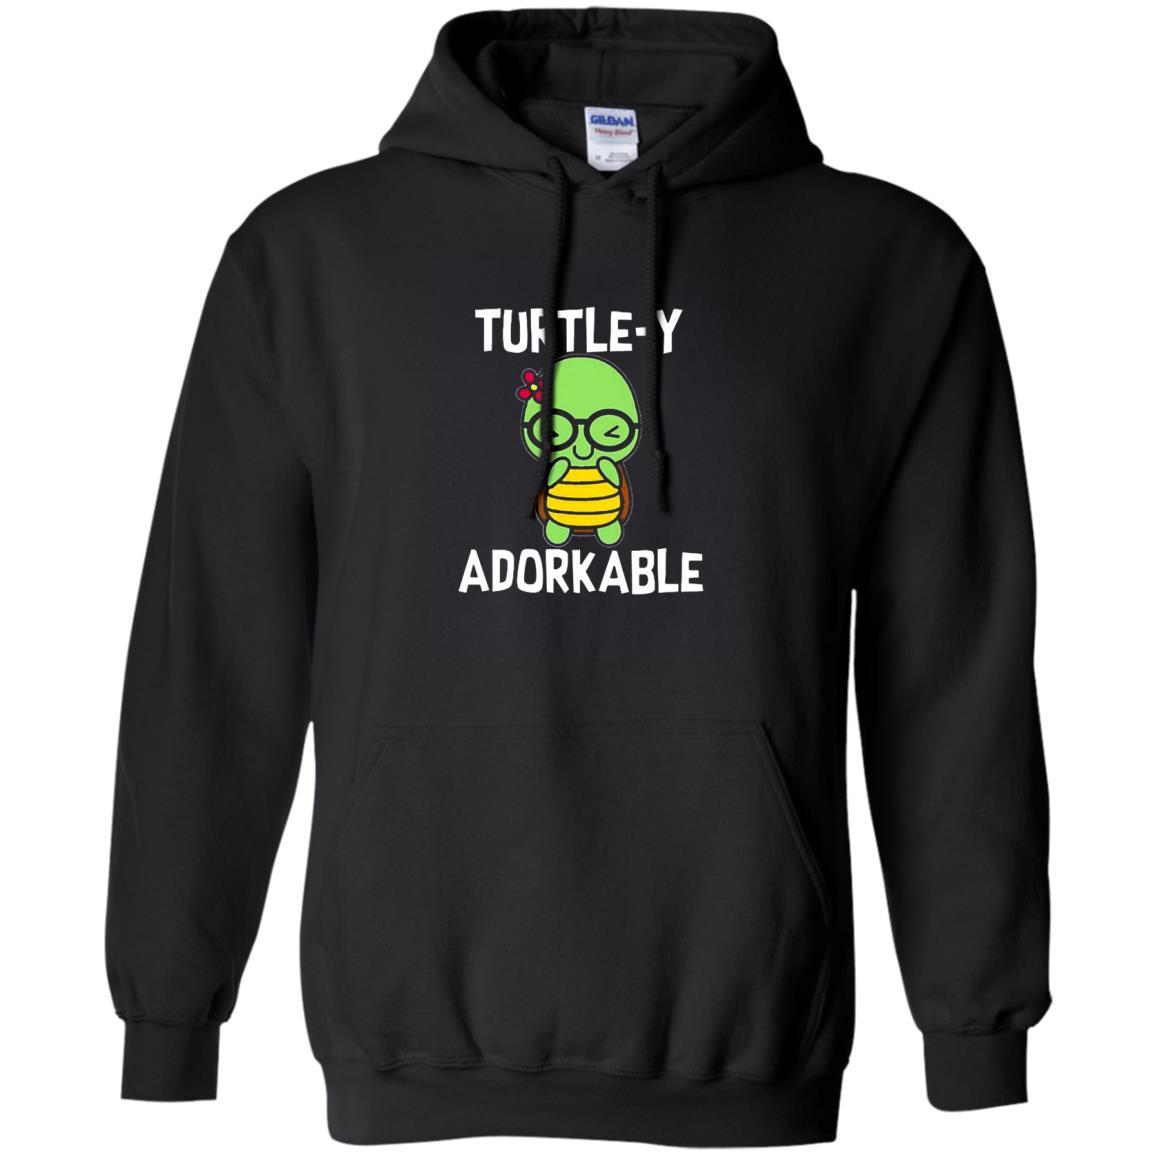 Turtle Y Adorkable Shirts